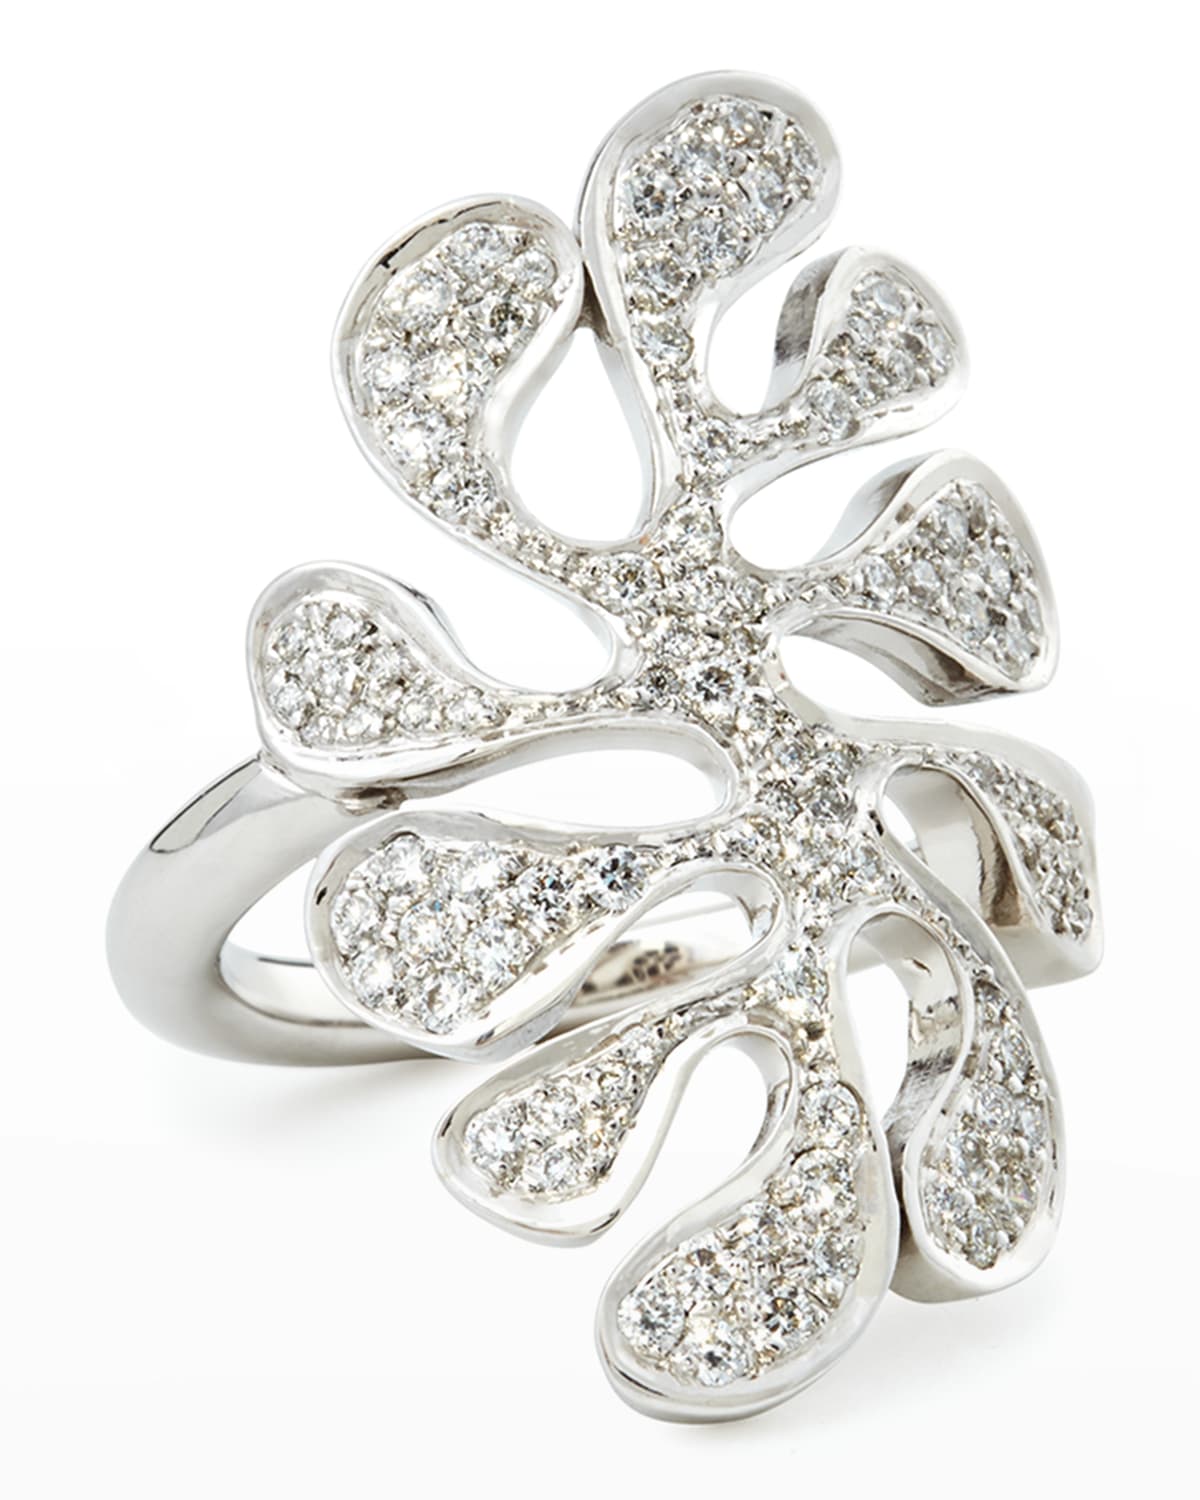 Sealeaf Collection 18k White Gold Diamond Ring, Size 6.5